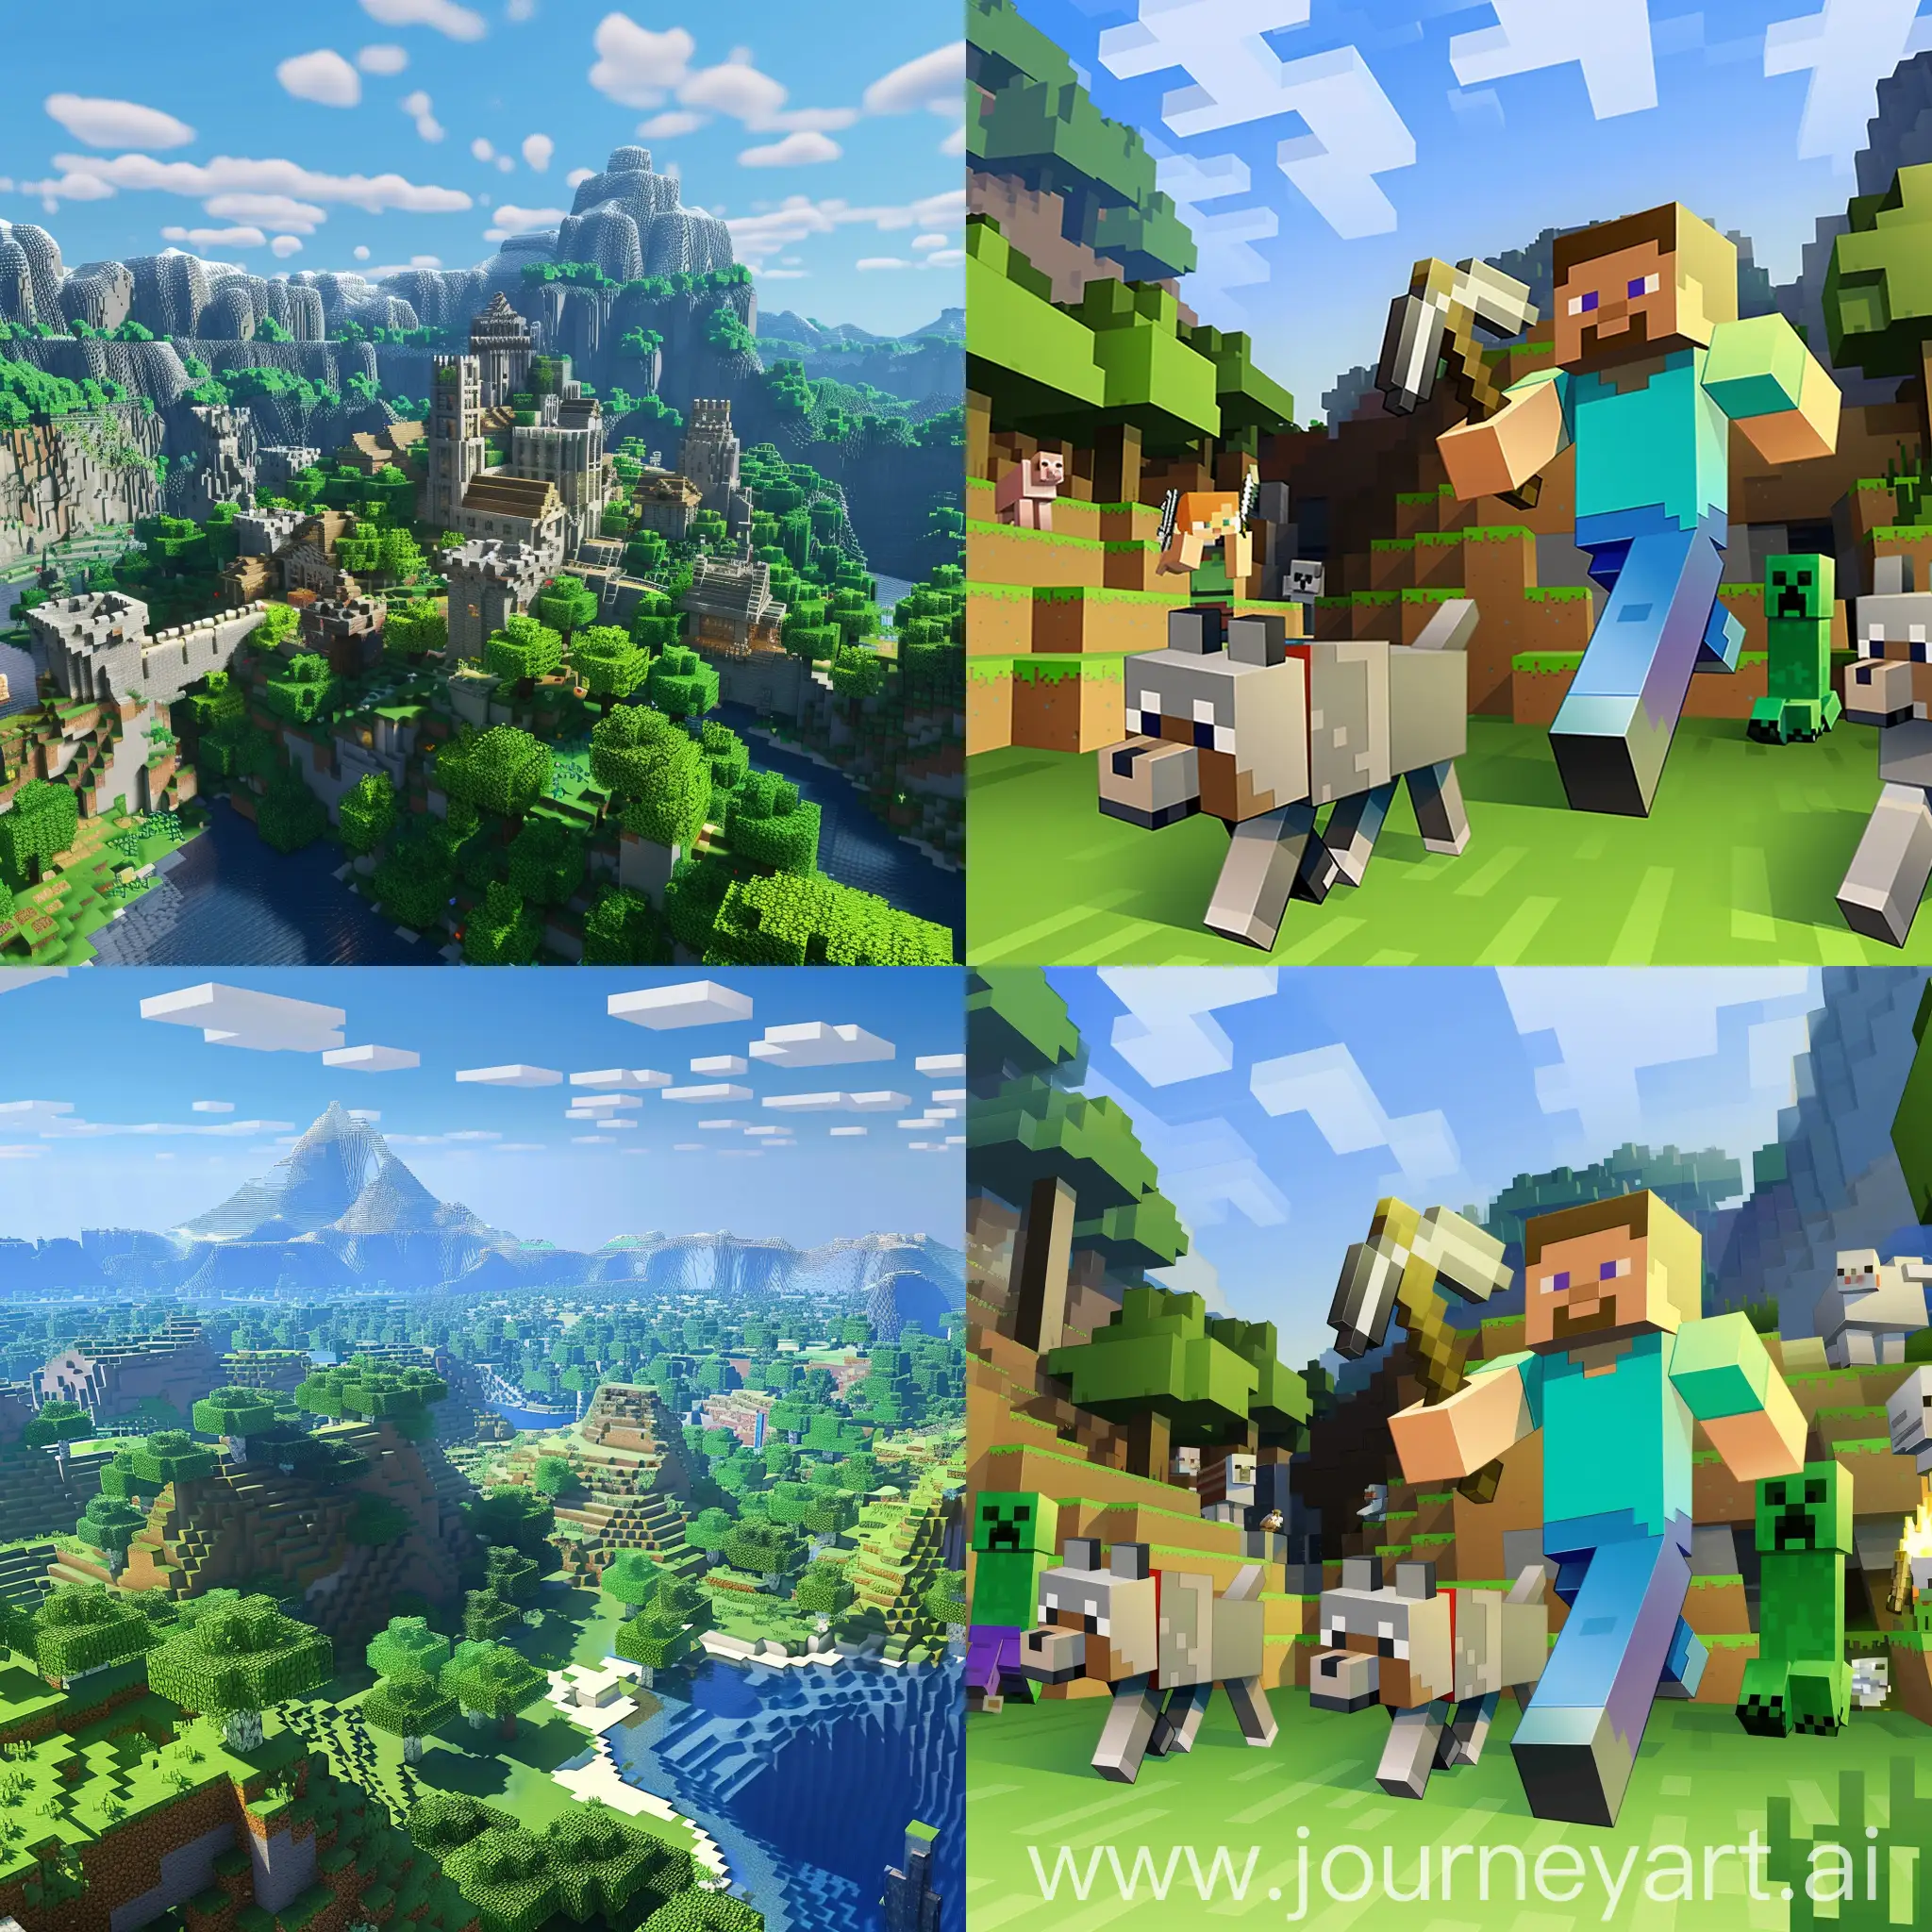 Minecraft-Adventure-Dynamic-Scene-with-Vast-Landscape